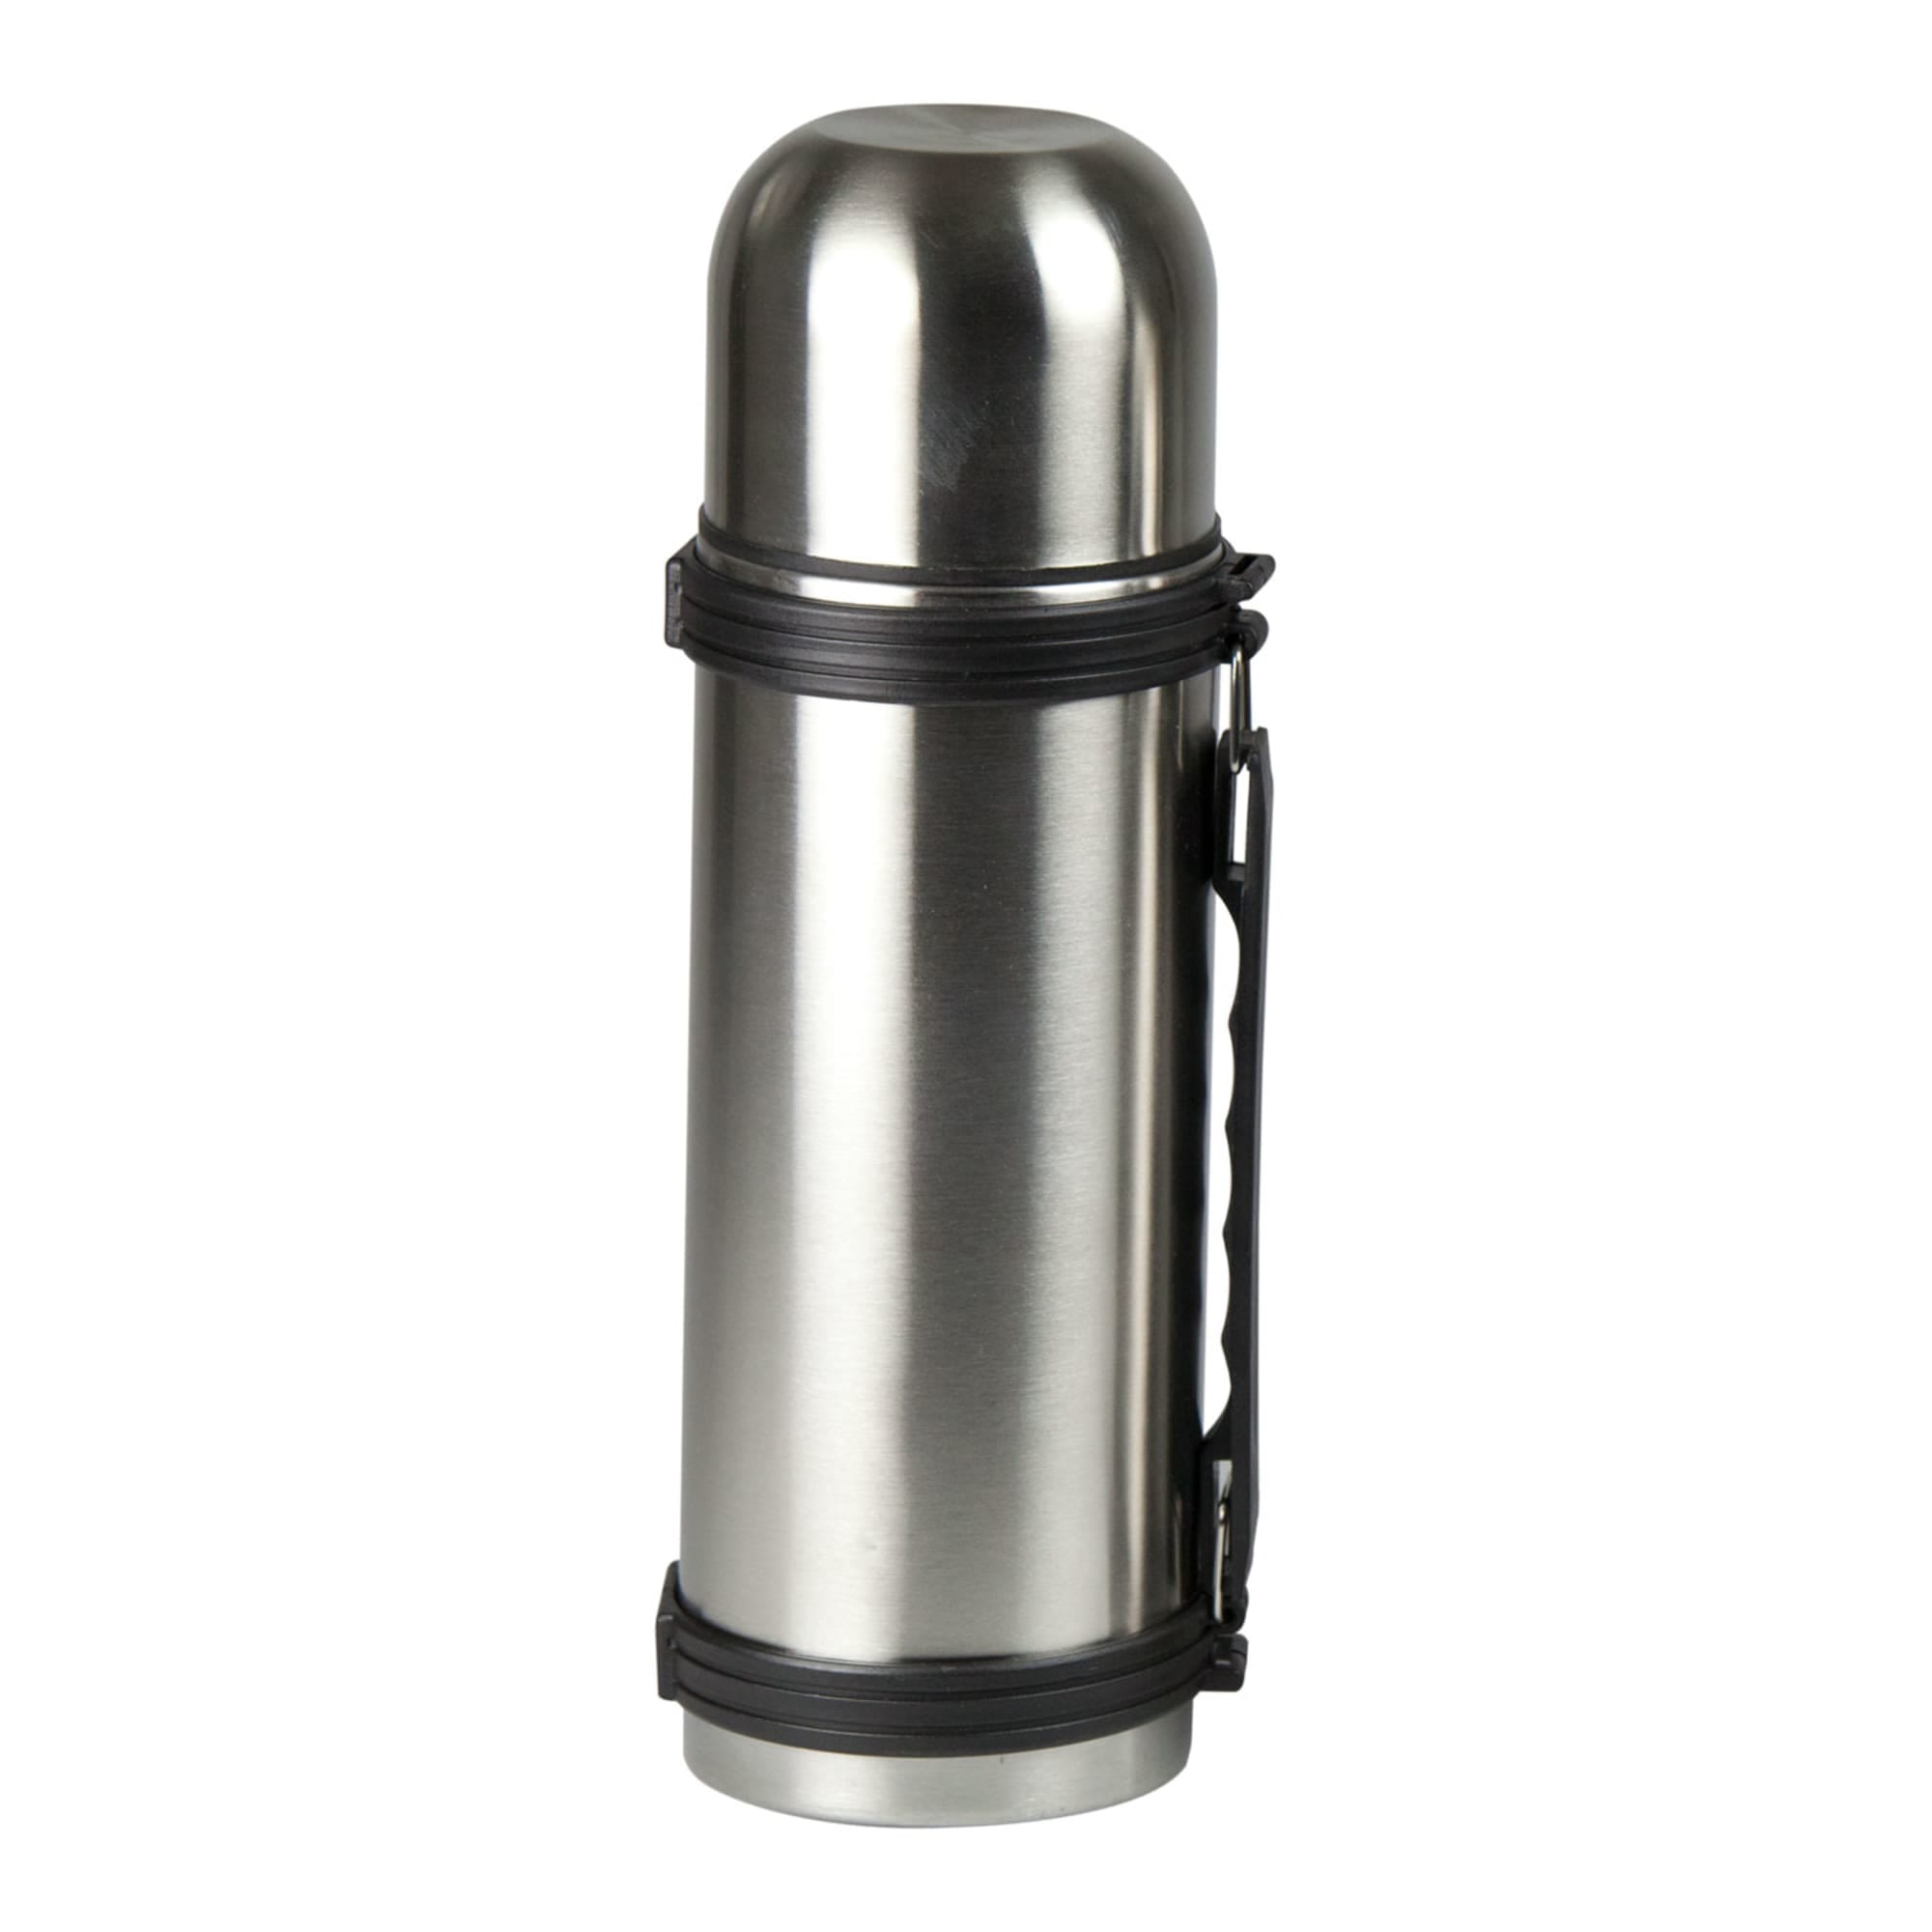 Home Basics Stainless Steel Bullet Vacuum Flask $6.00 EACH, CASE PACK OF 12